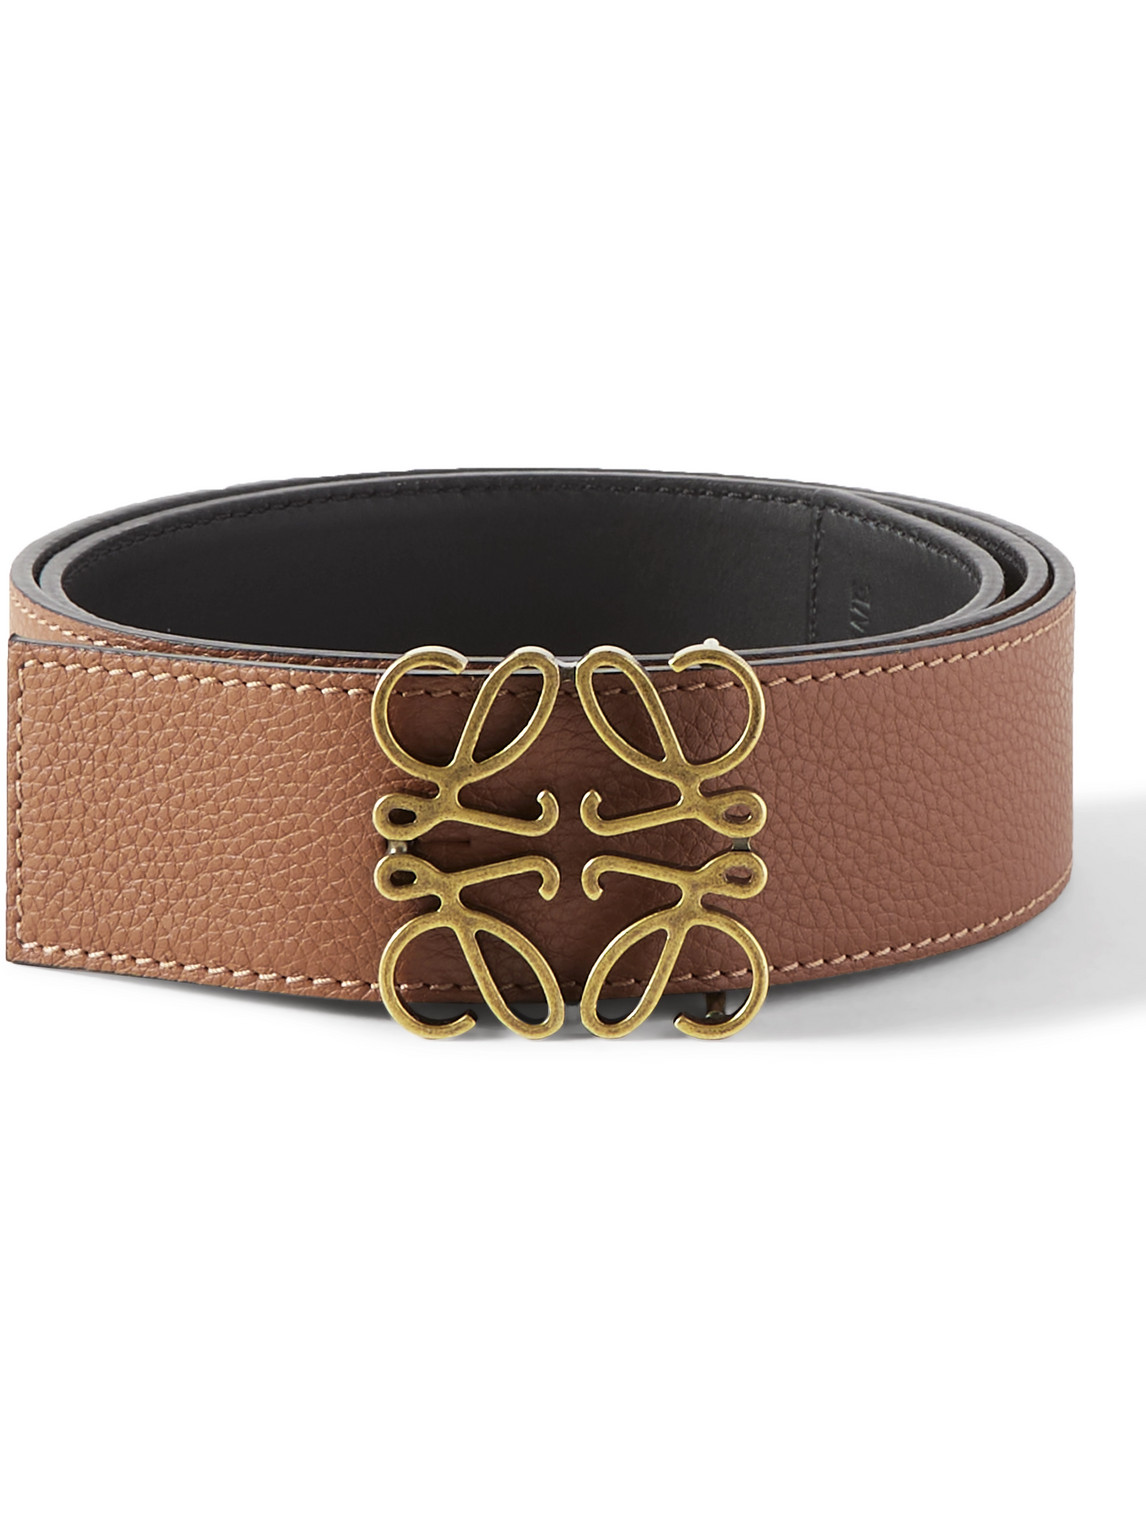 4cm Anagram Reversible Leather Belt